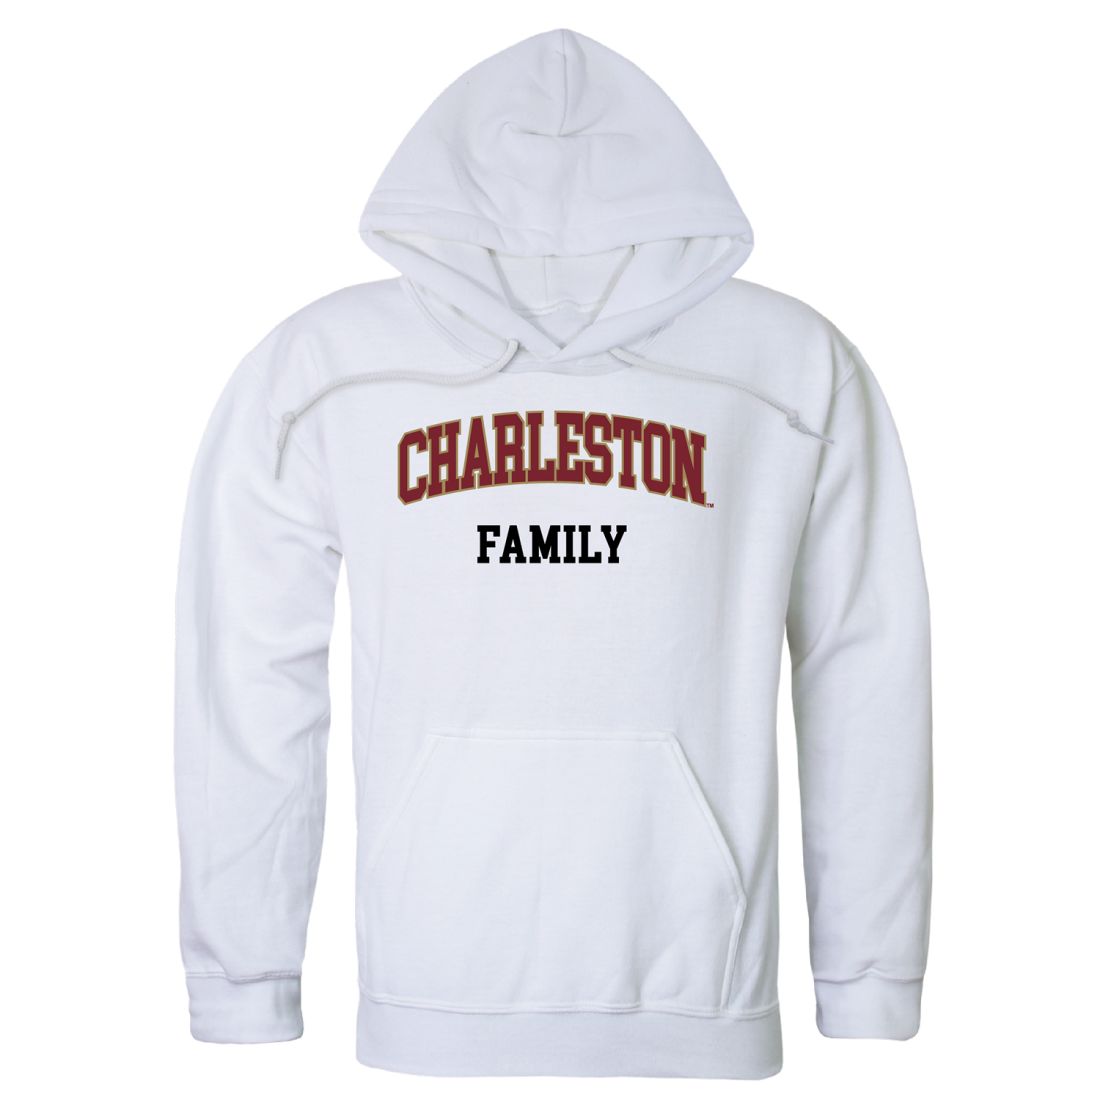 COFC College of Charleston Cougars Family Hoodie Sweatshirts